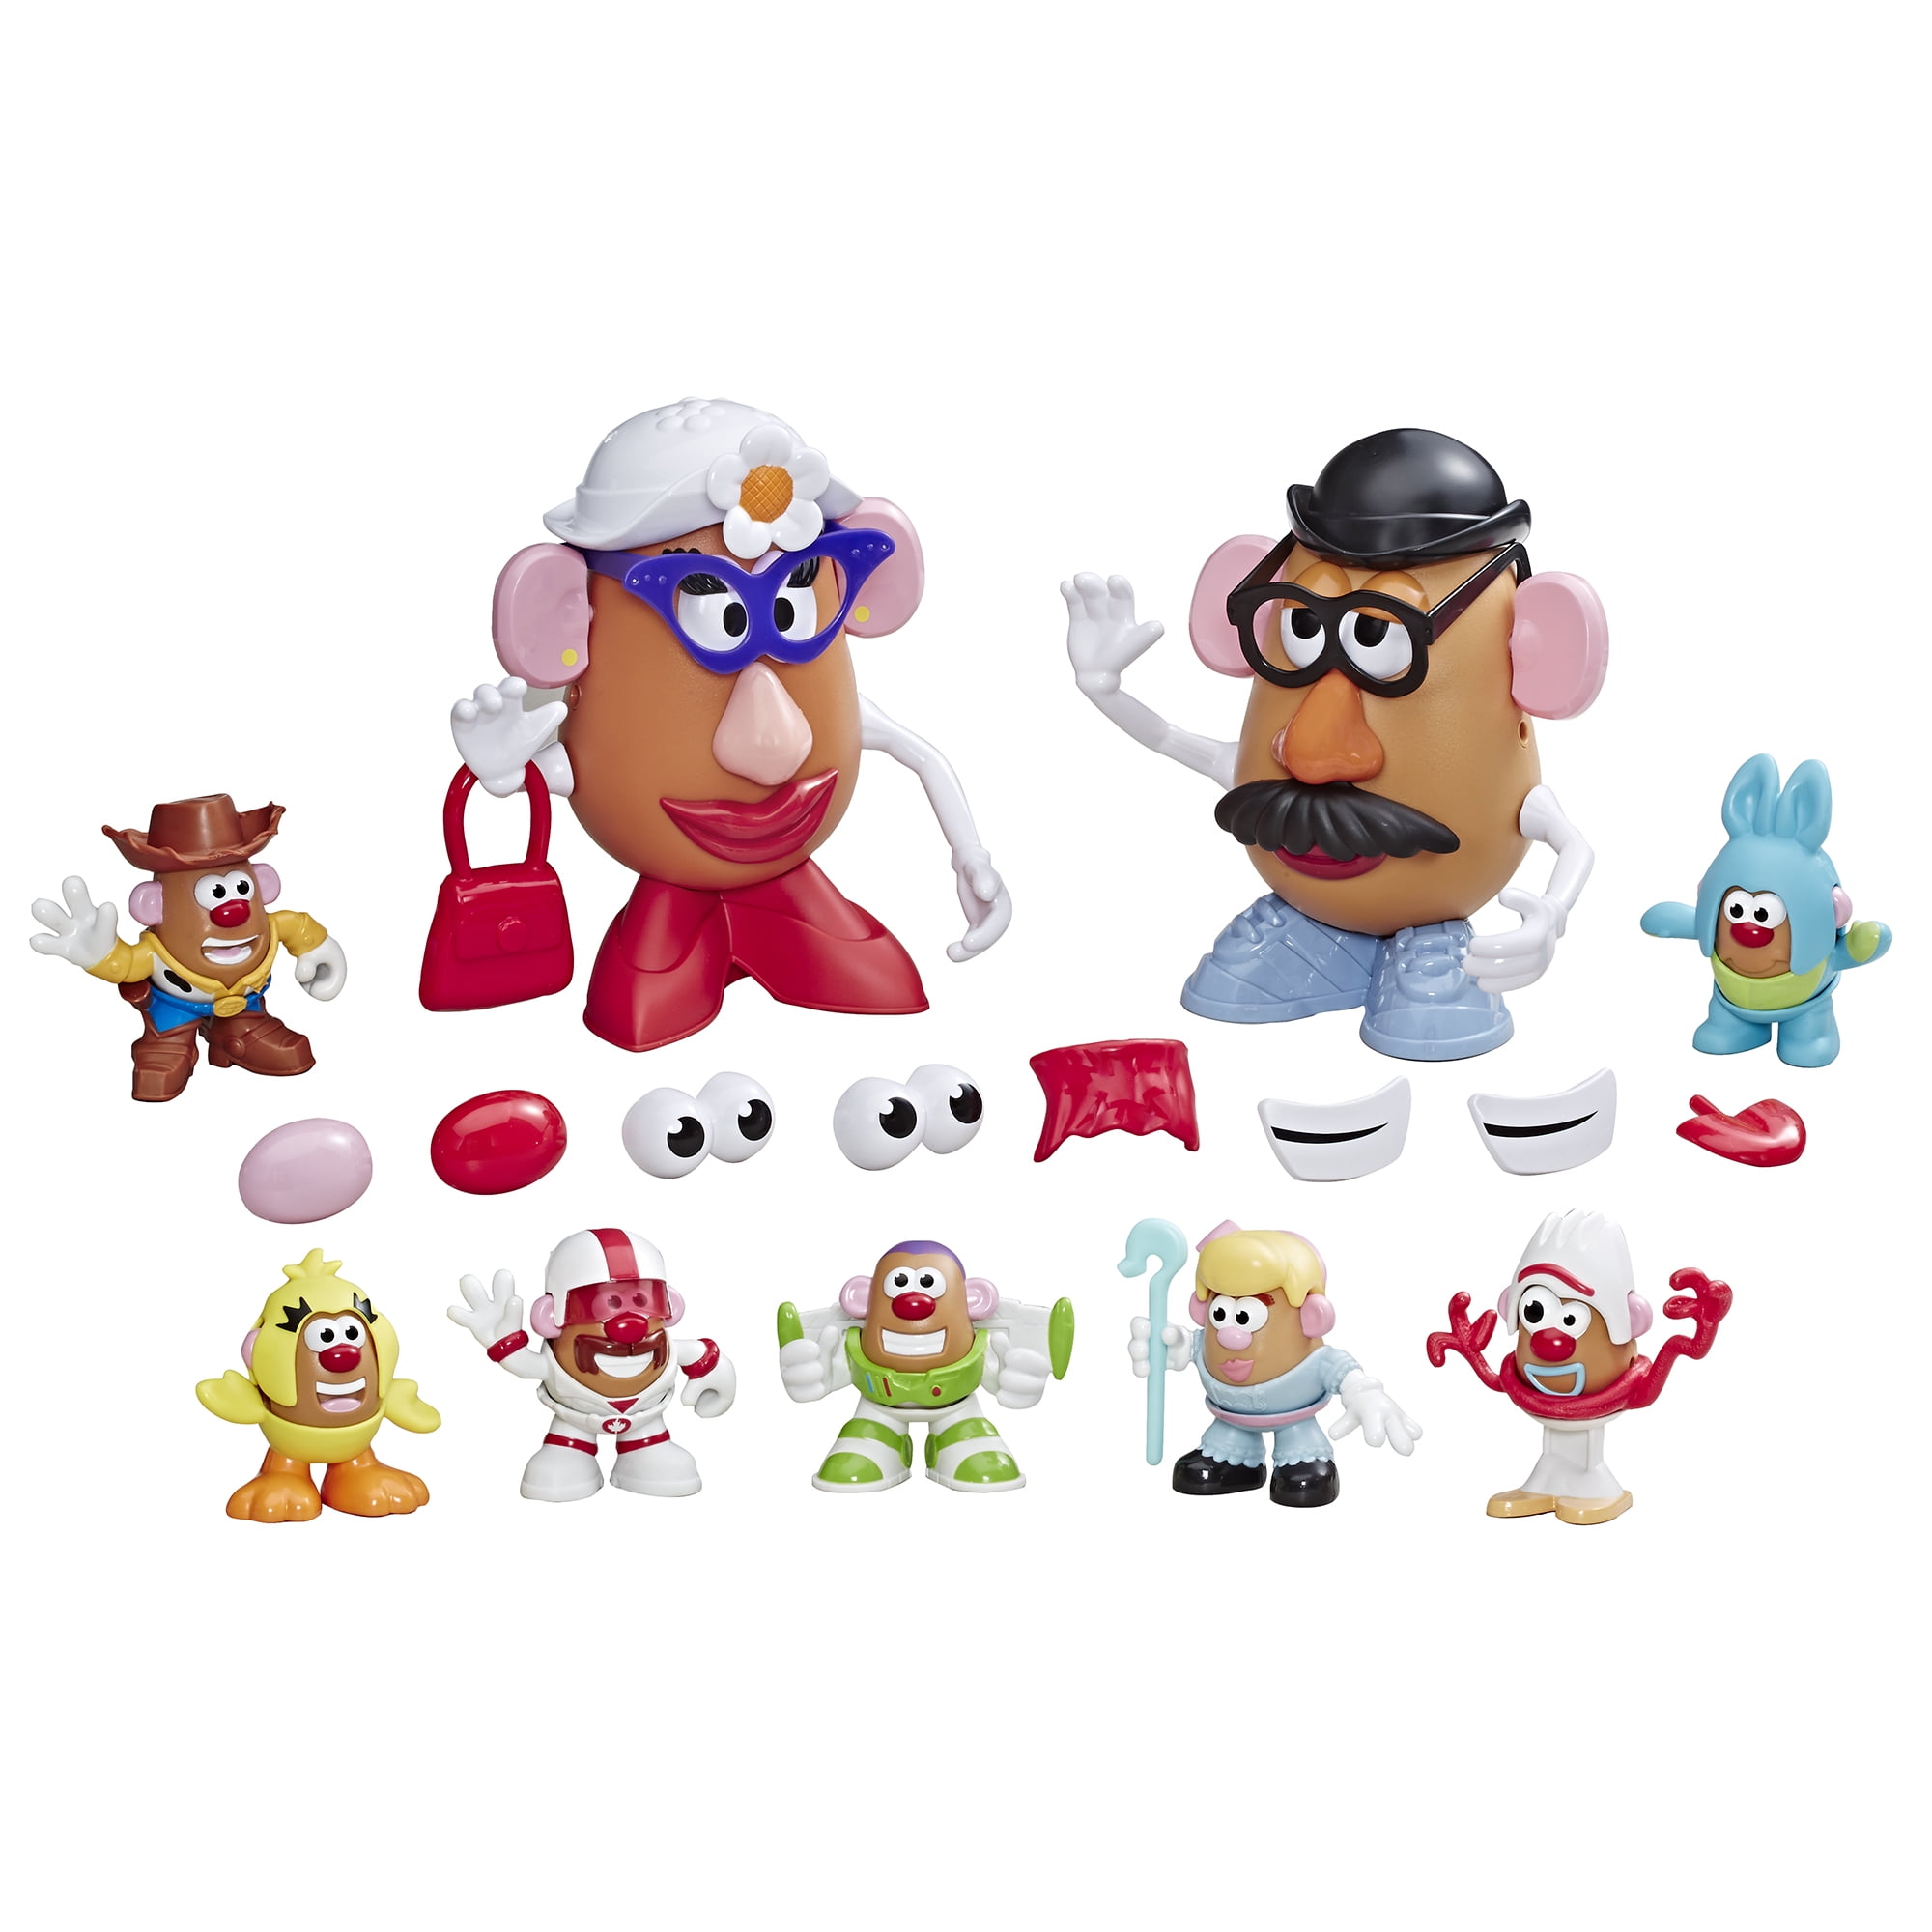 Toy Story 3 Woody's Tater Round up Mr Potato Head 2009 Playskool Hasbro Disney for sale online 